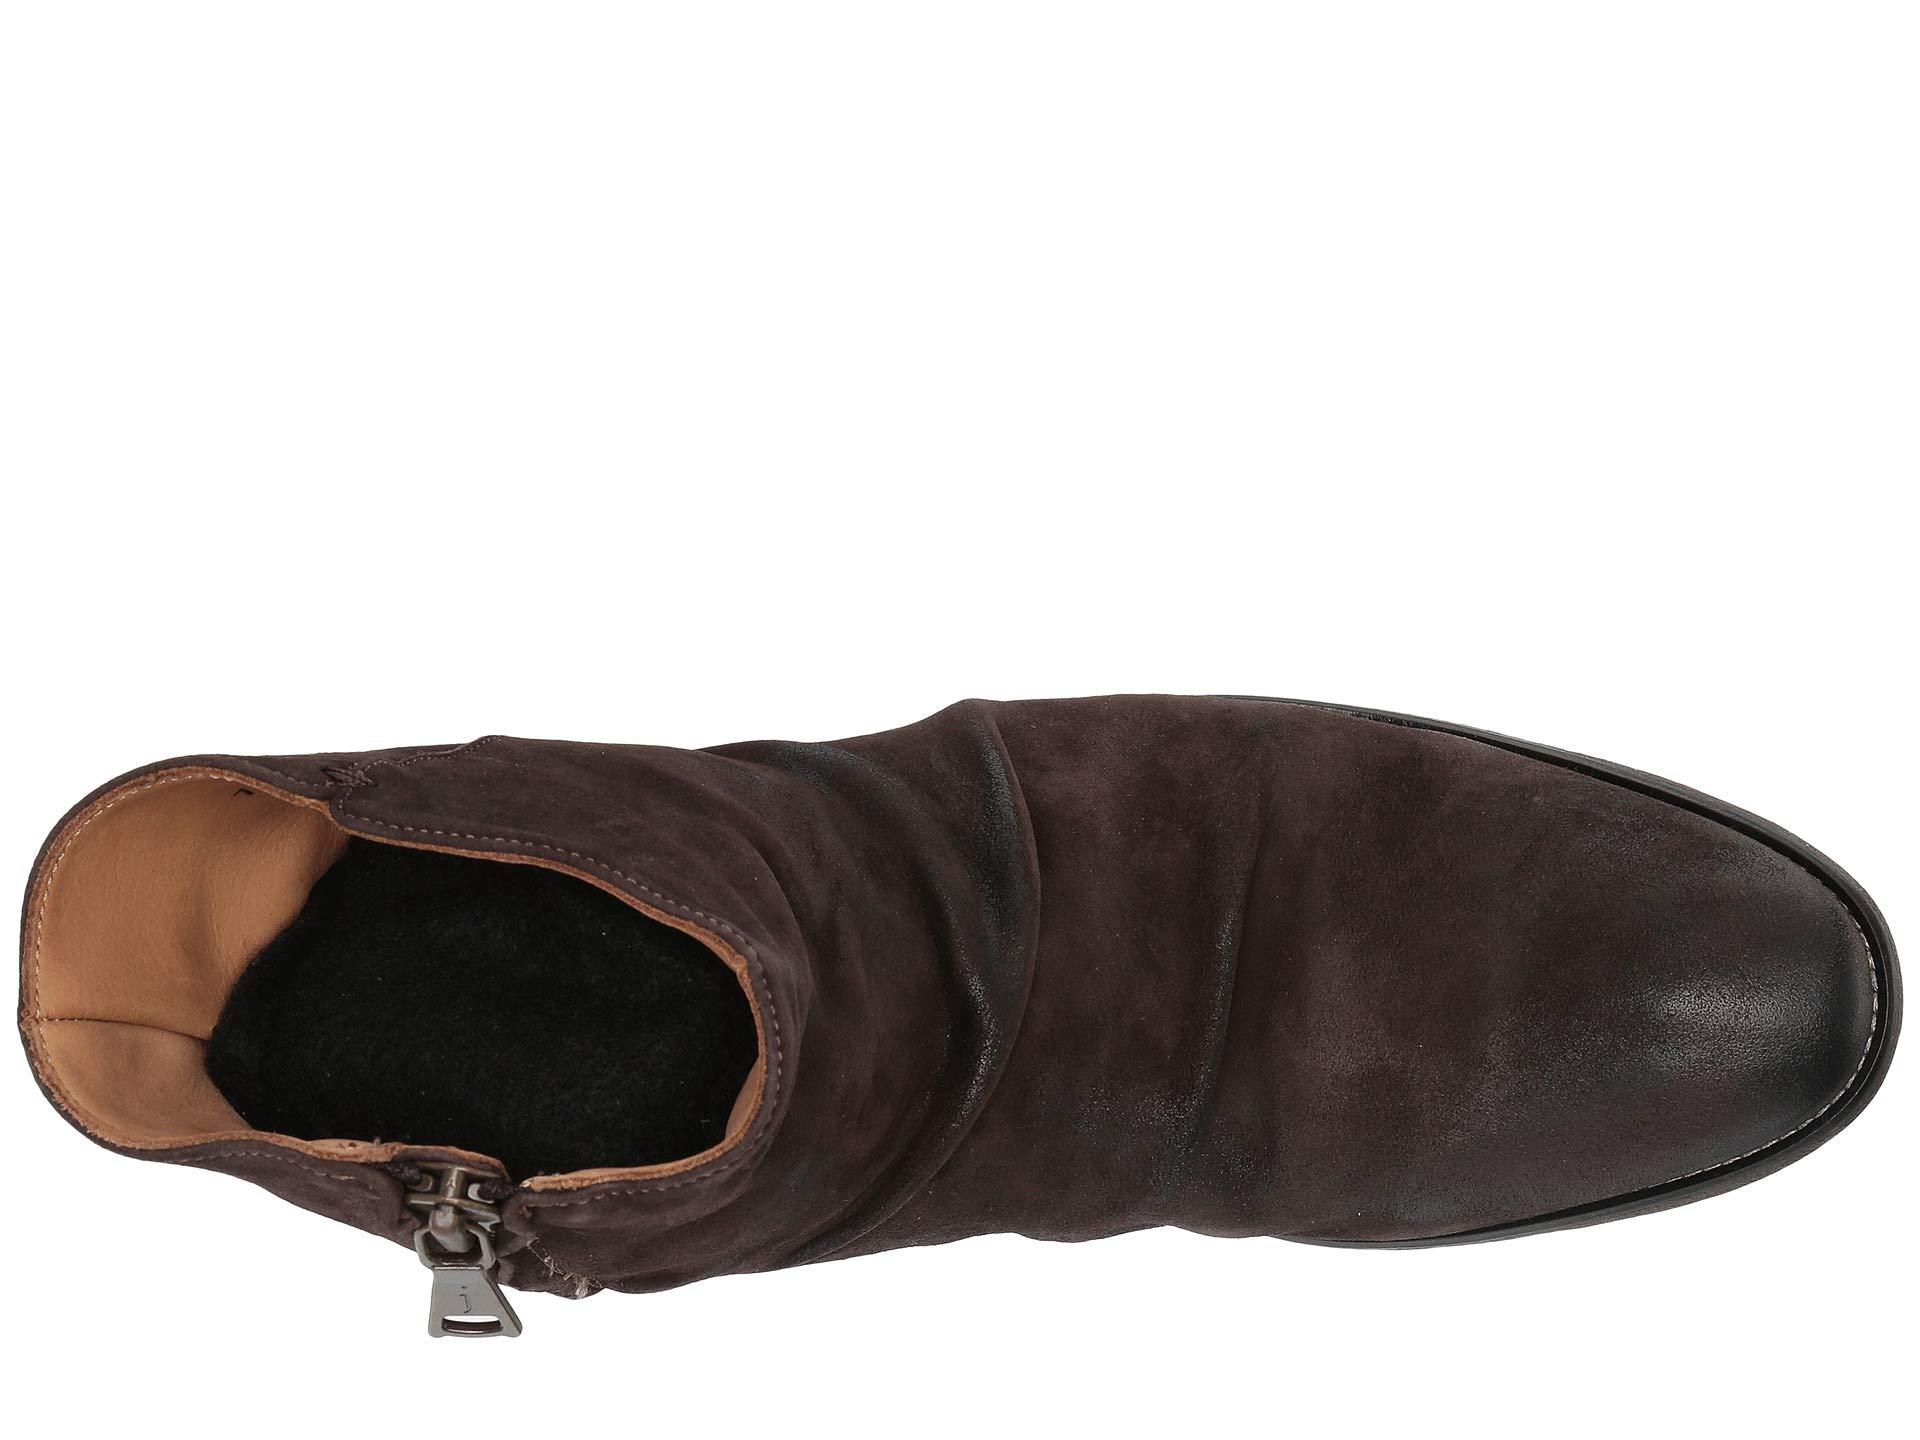 John Varvatos Leather Morrison Sharpei Boot in Brown for Men - Lyst